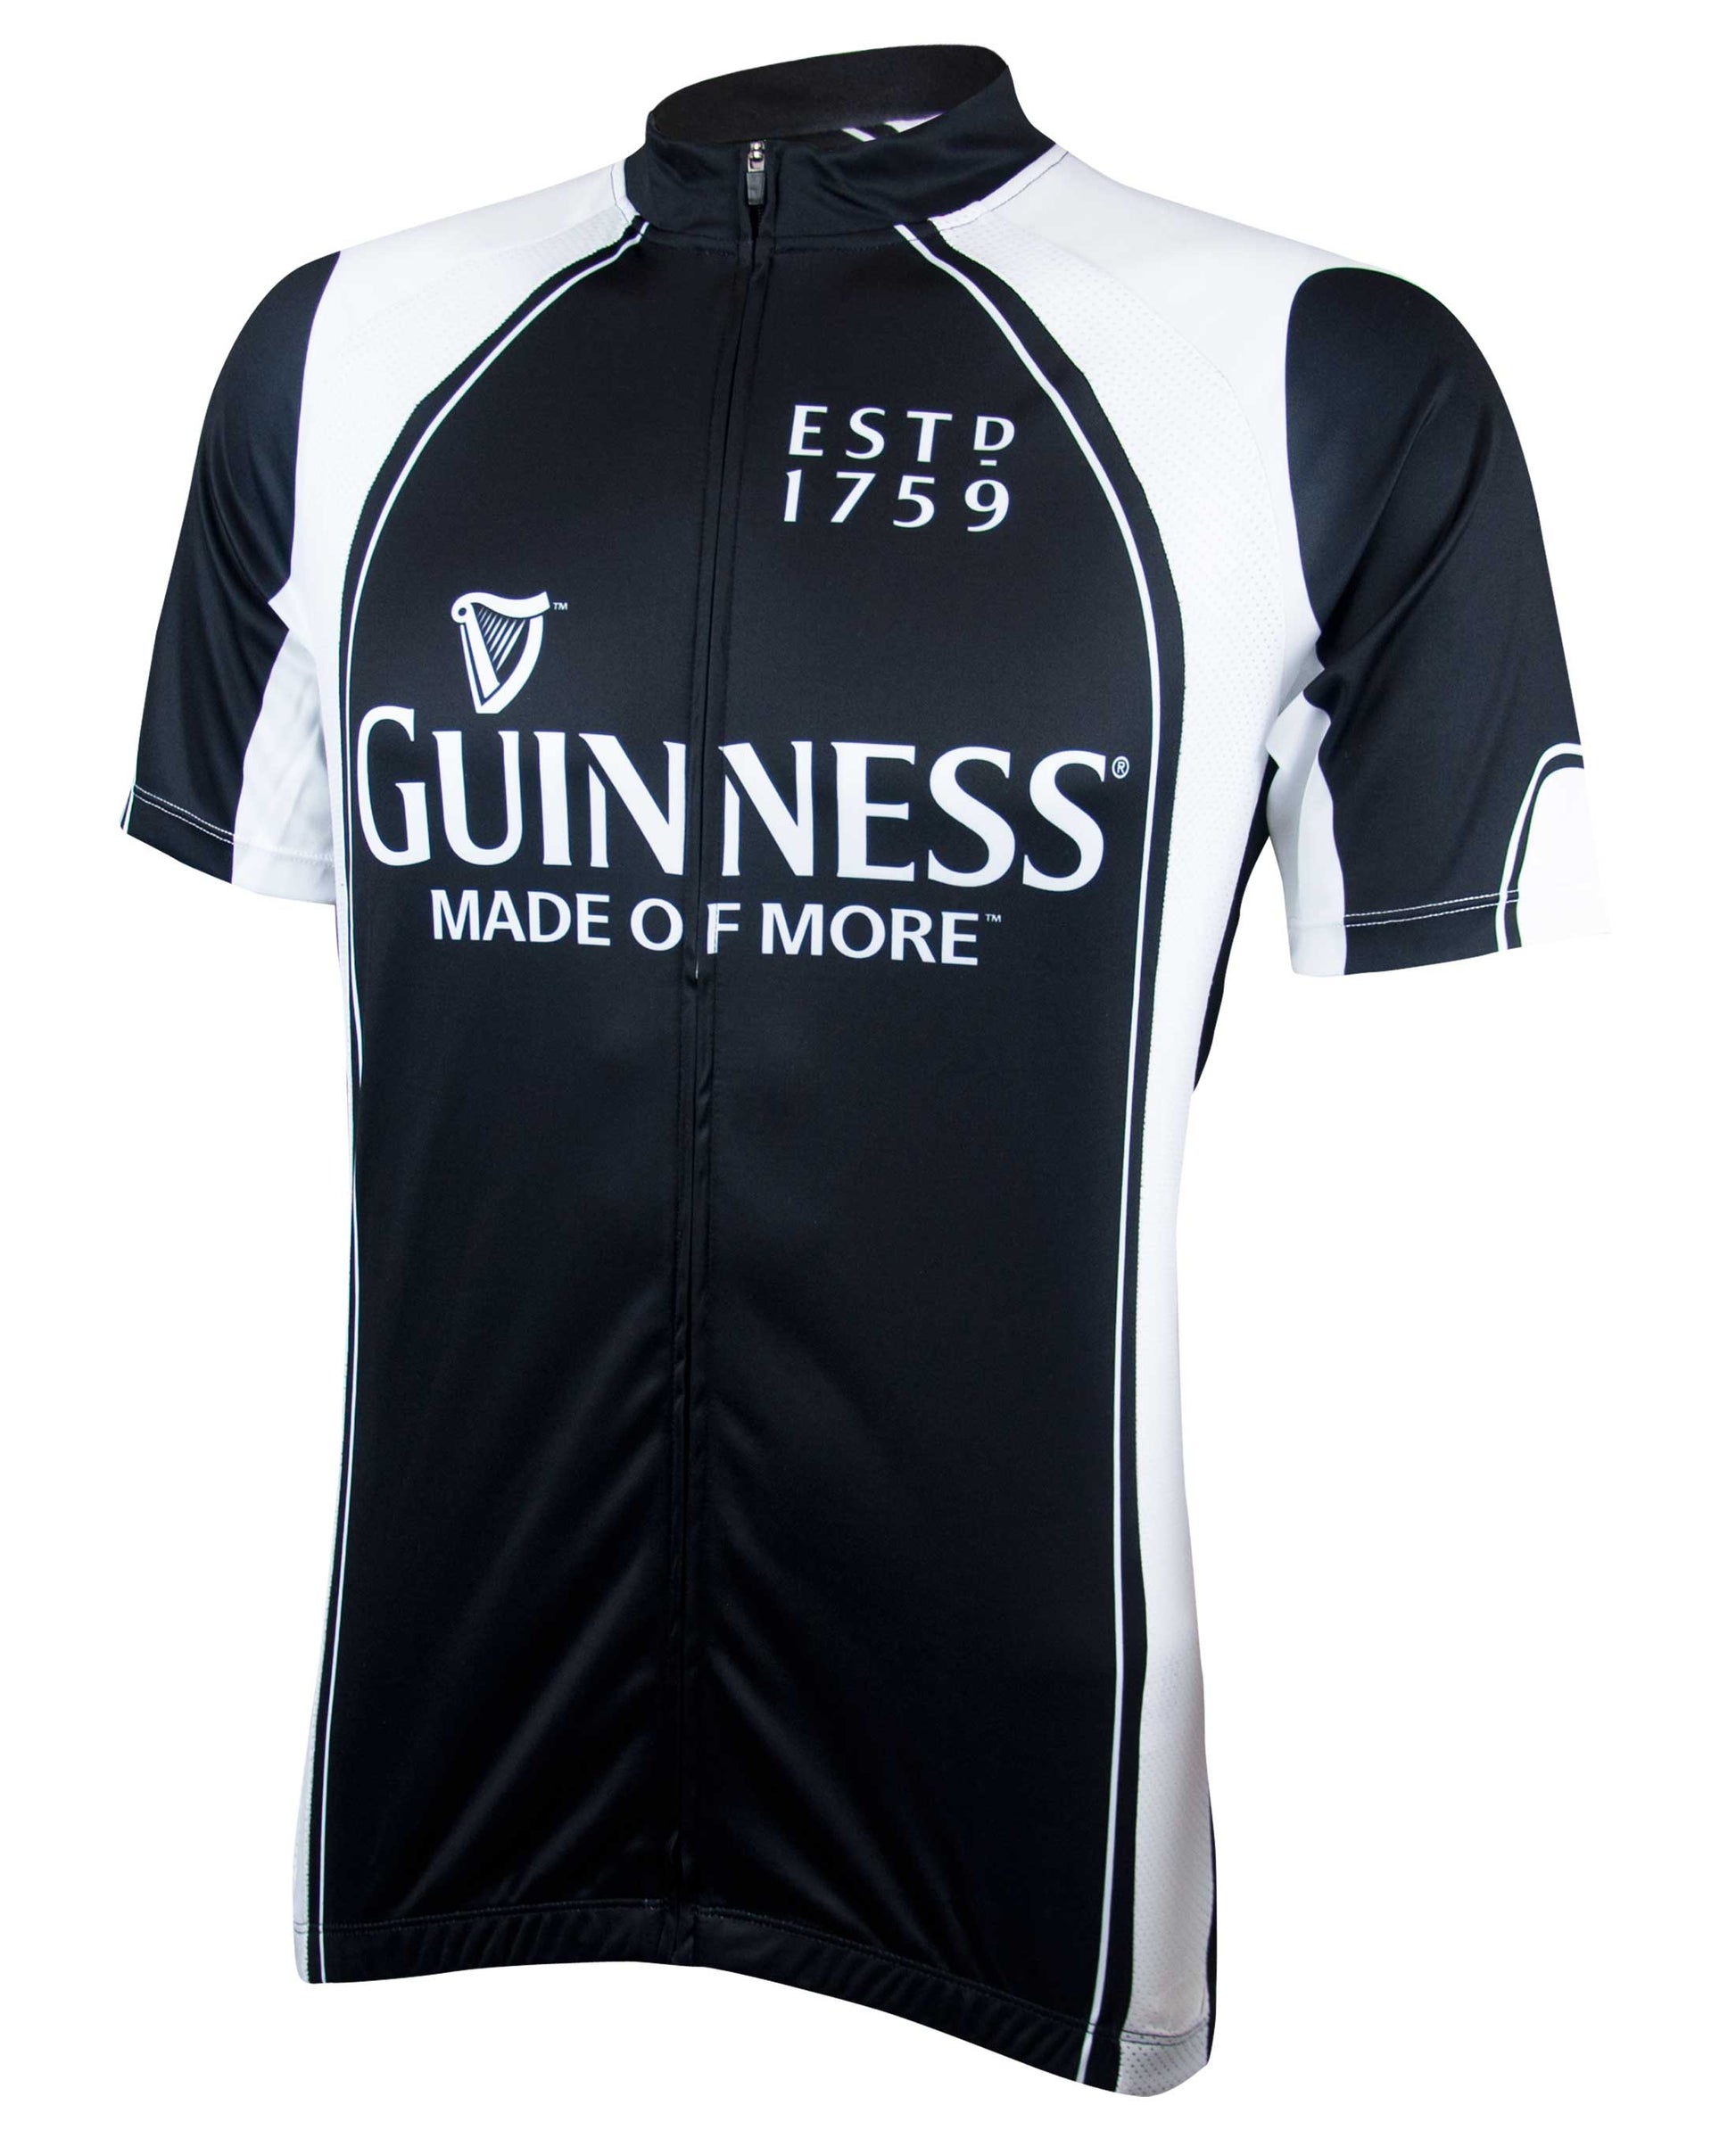 Guinness UK Cycling Jersey, race cut.